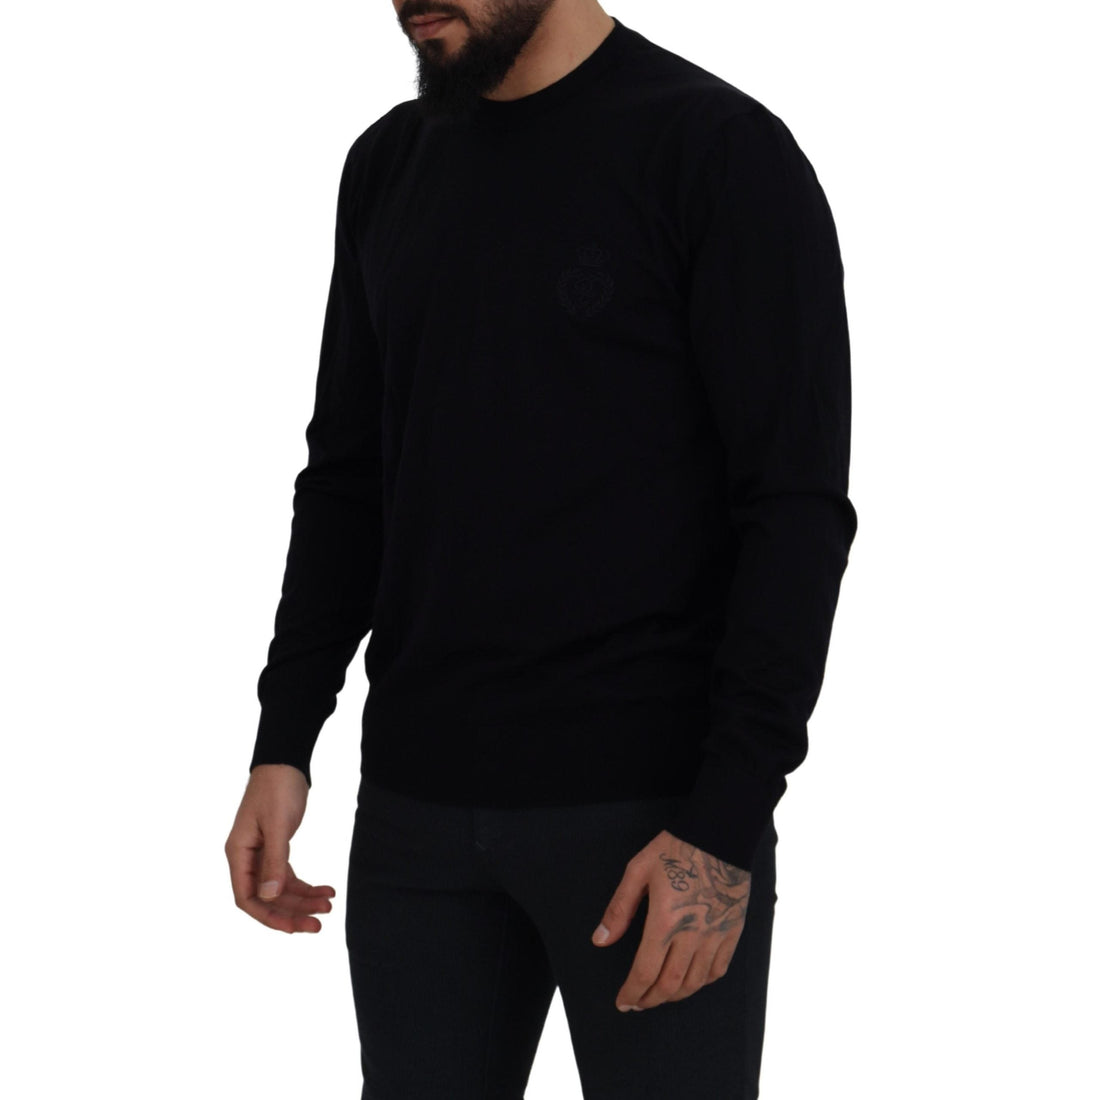 Dolce & Gabbana Black Virgin Wool Crewneck Pullover  Sweater